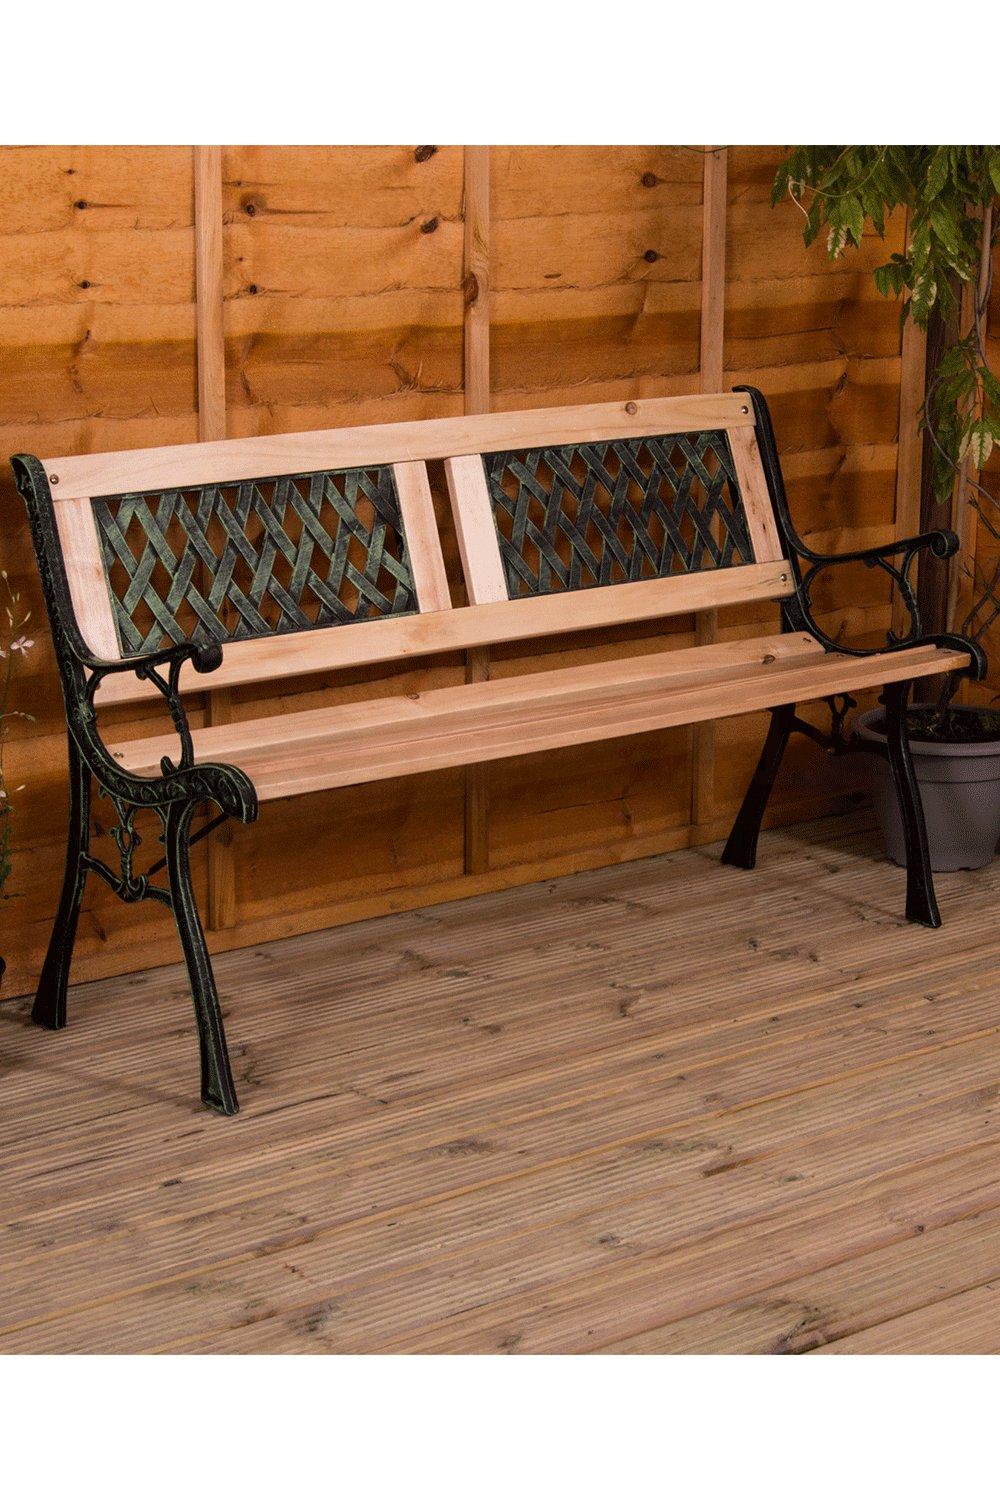 Garden Vida Garden Bench Twin Cross Style 3 Seater Outdoor Furniture